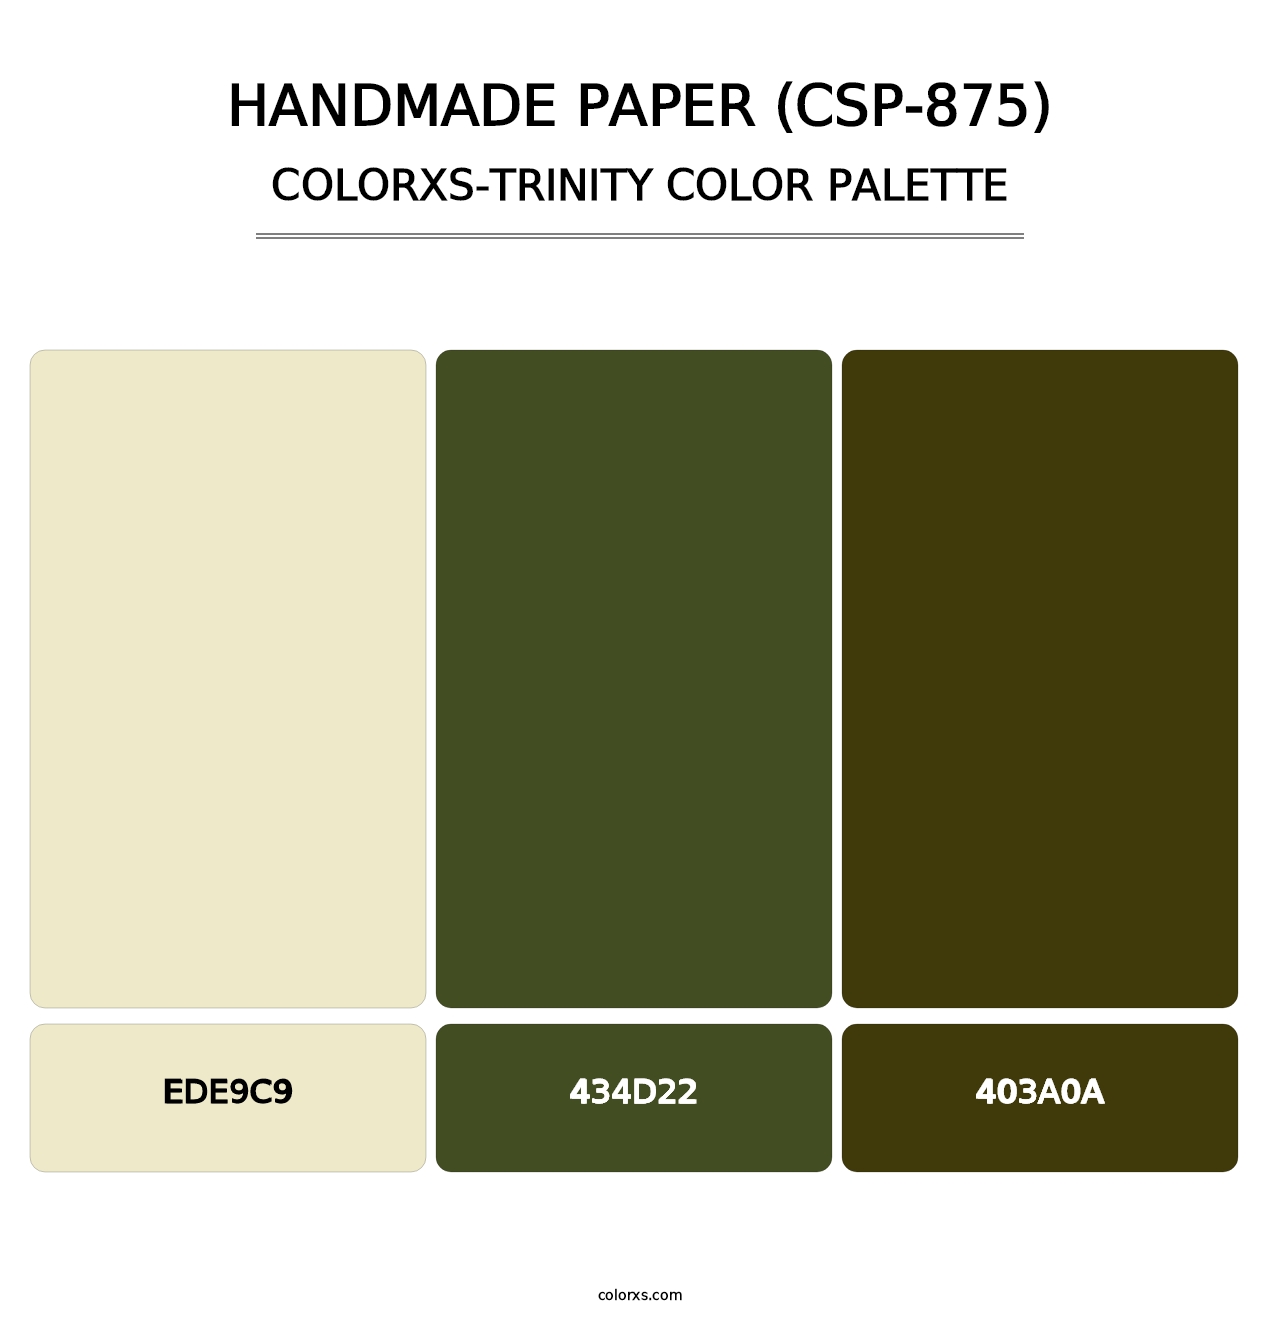 Handmade Paper (CSP-875) - Colorxs Trinity Palette